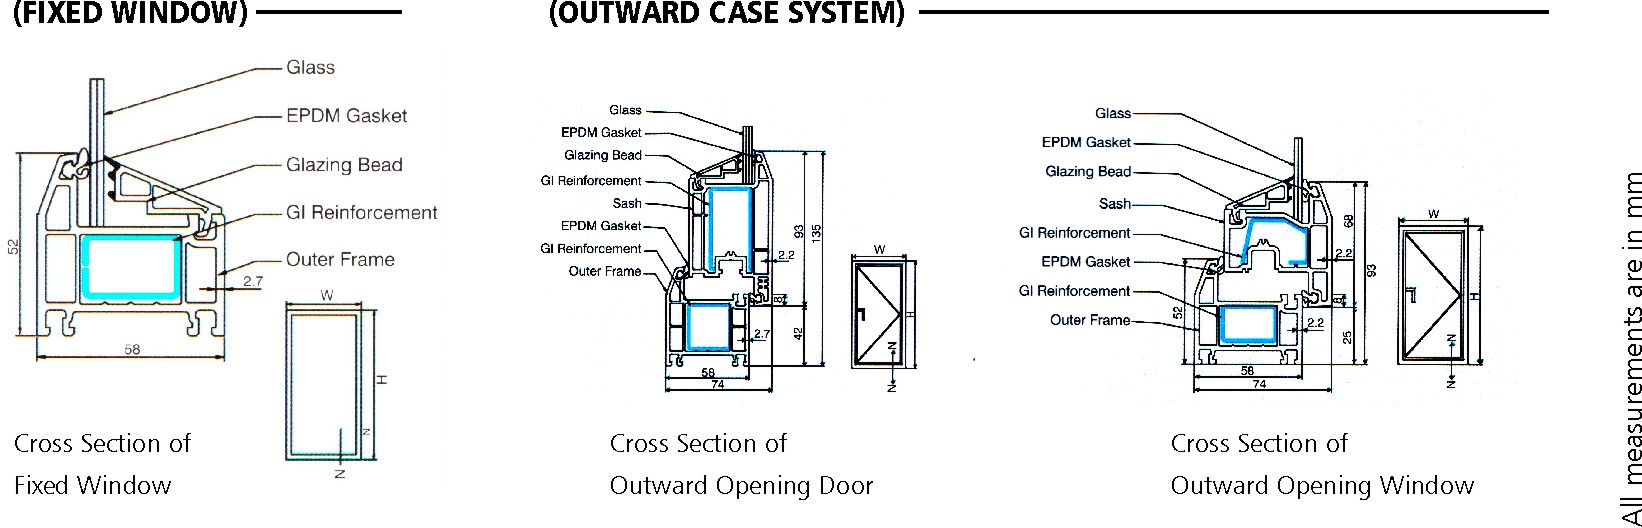 outward case system